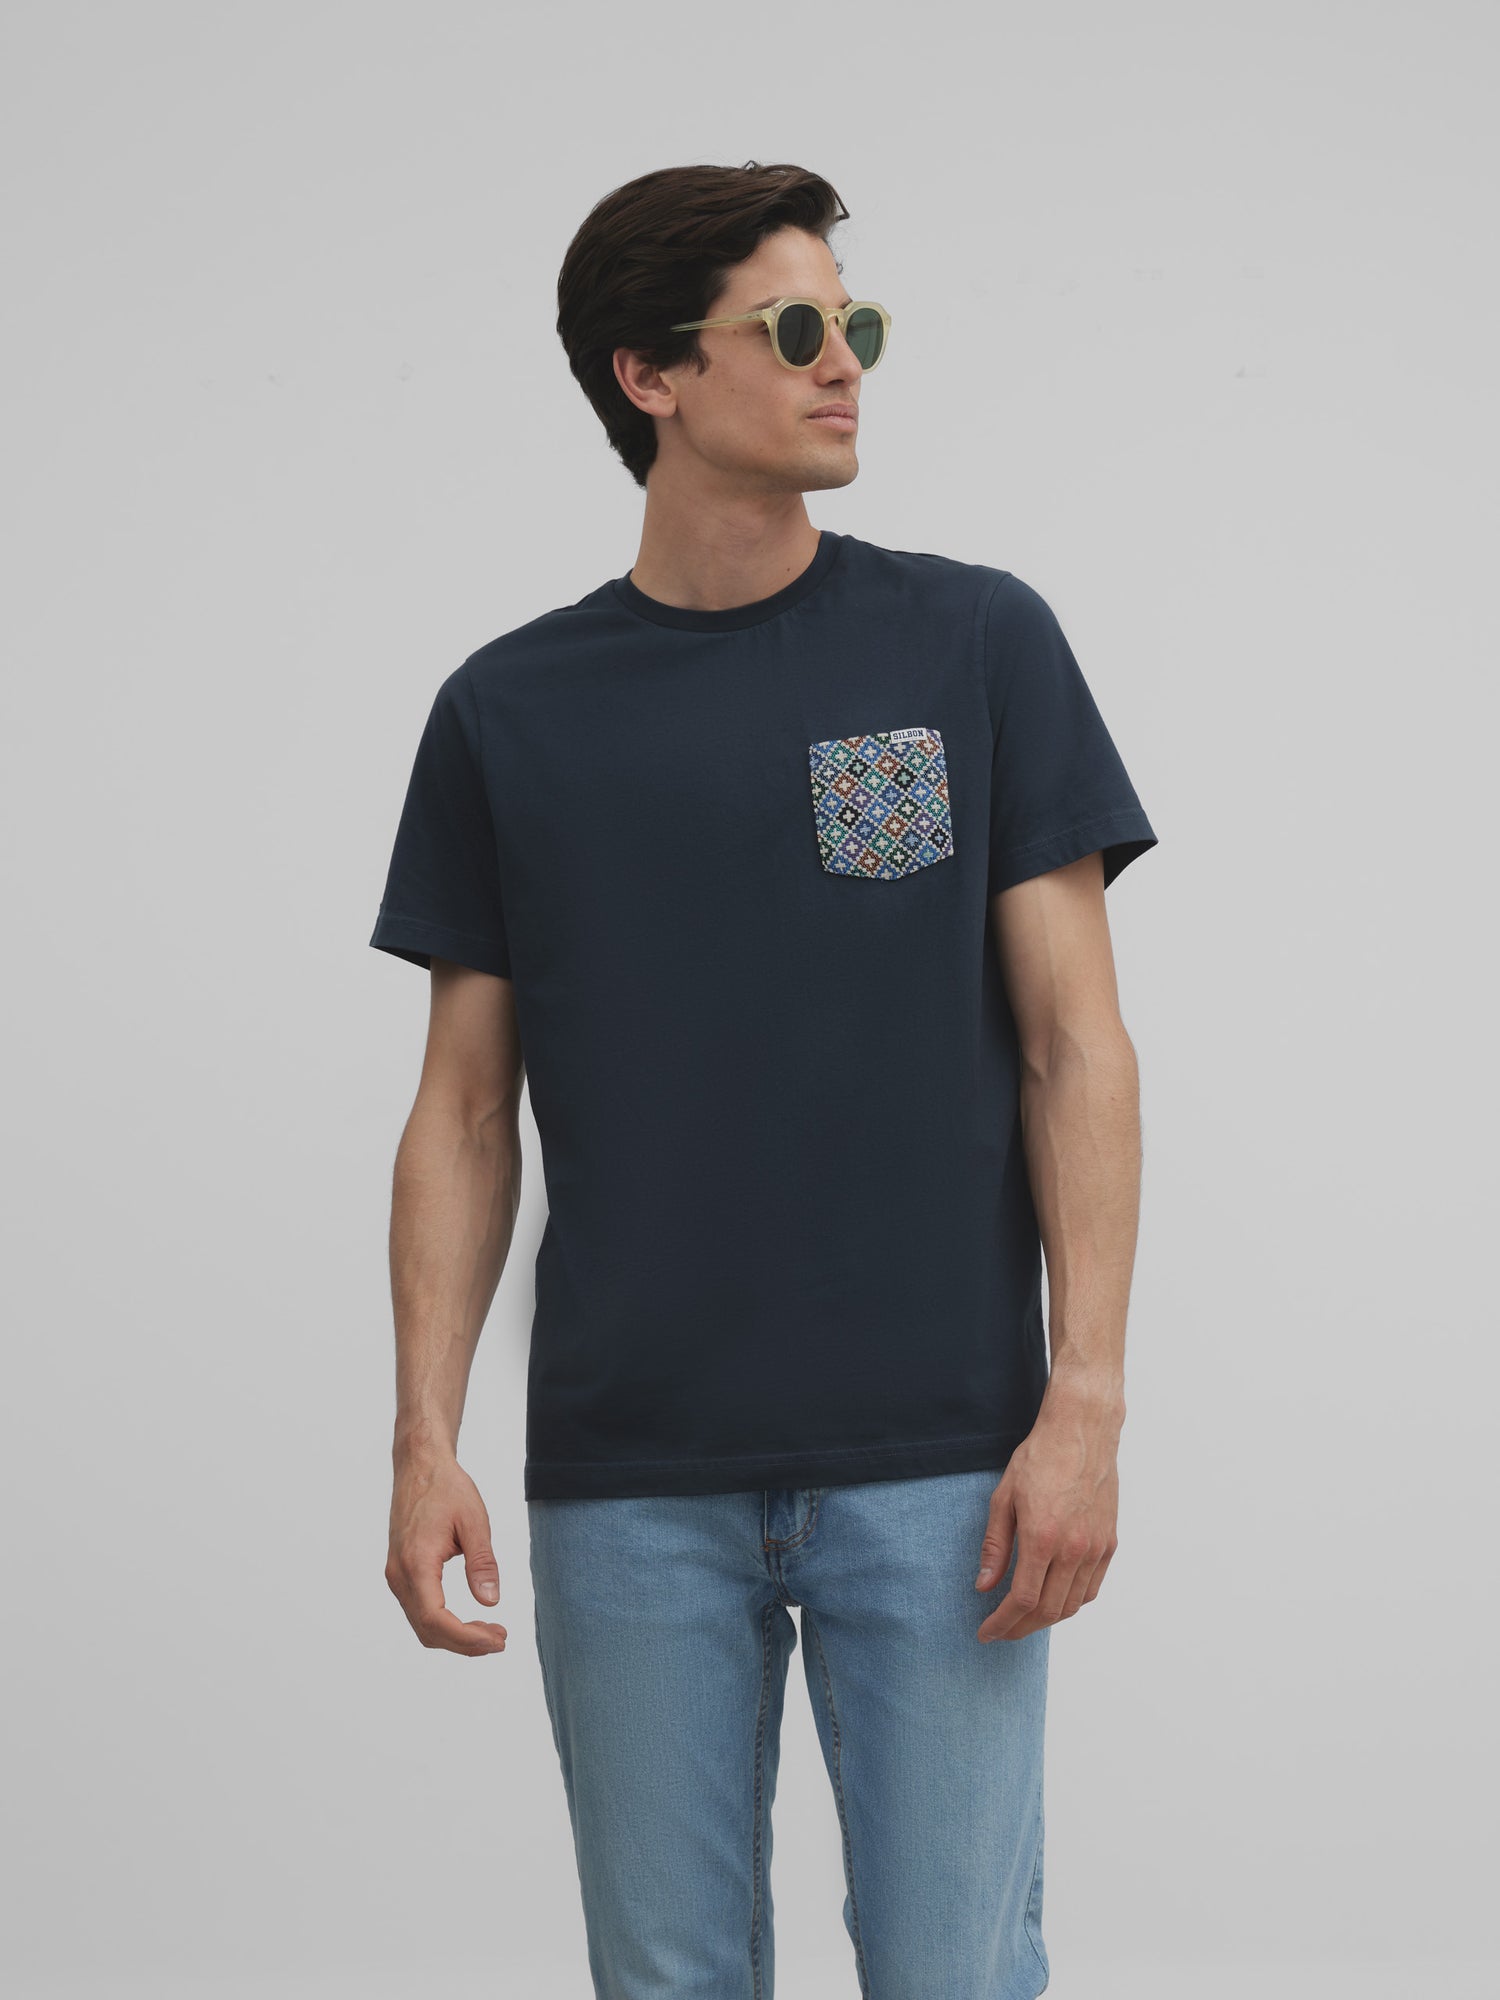 Classic navy blue ethnic pocket t-shirt